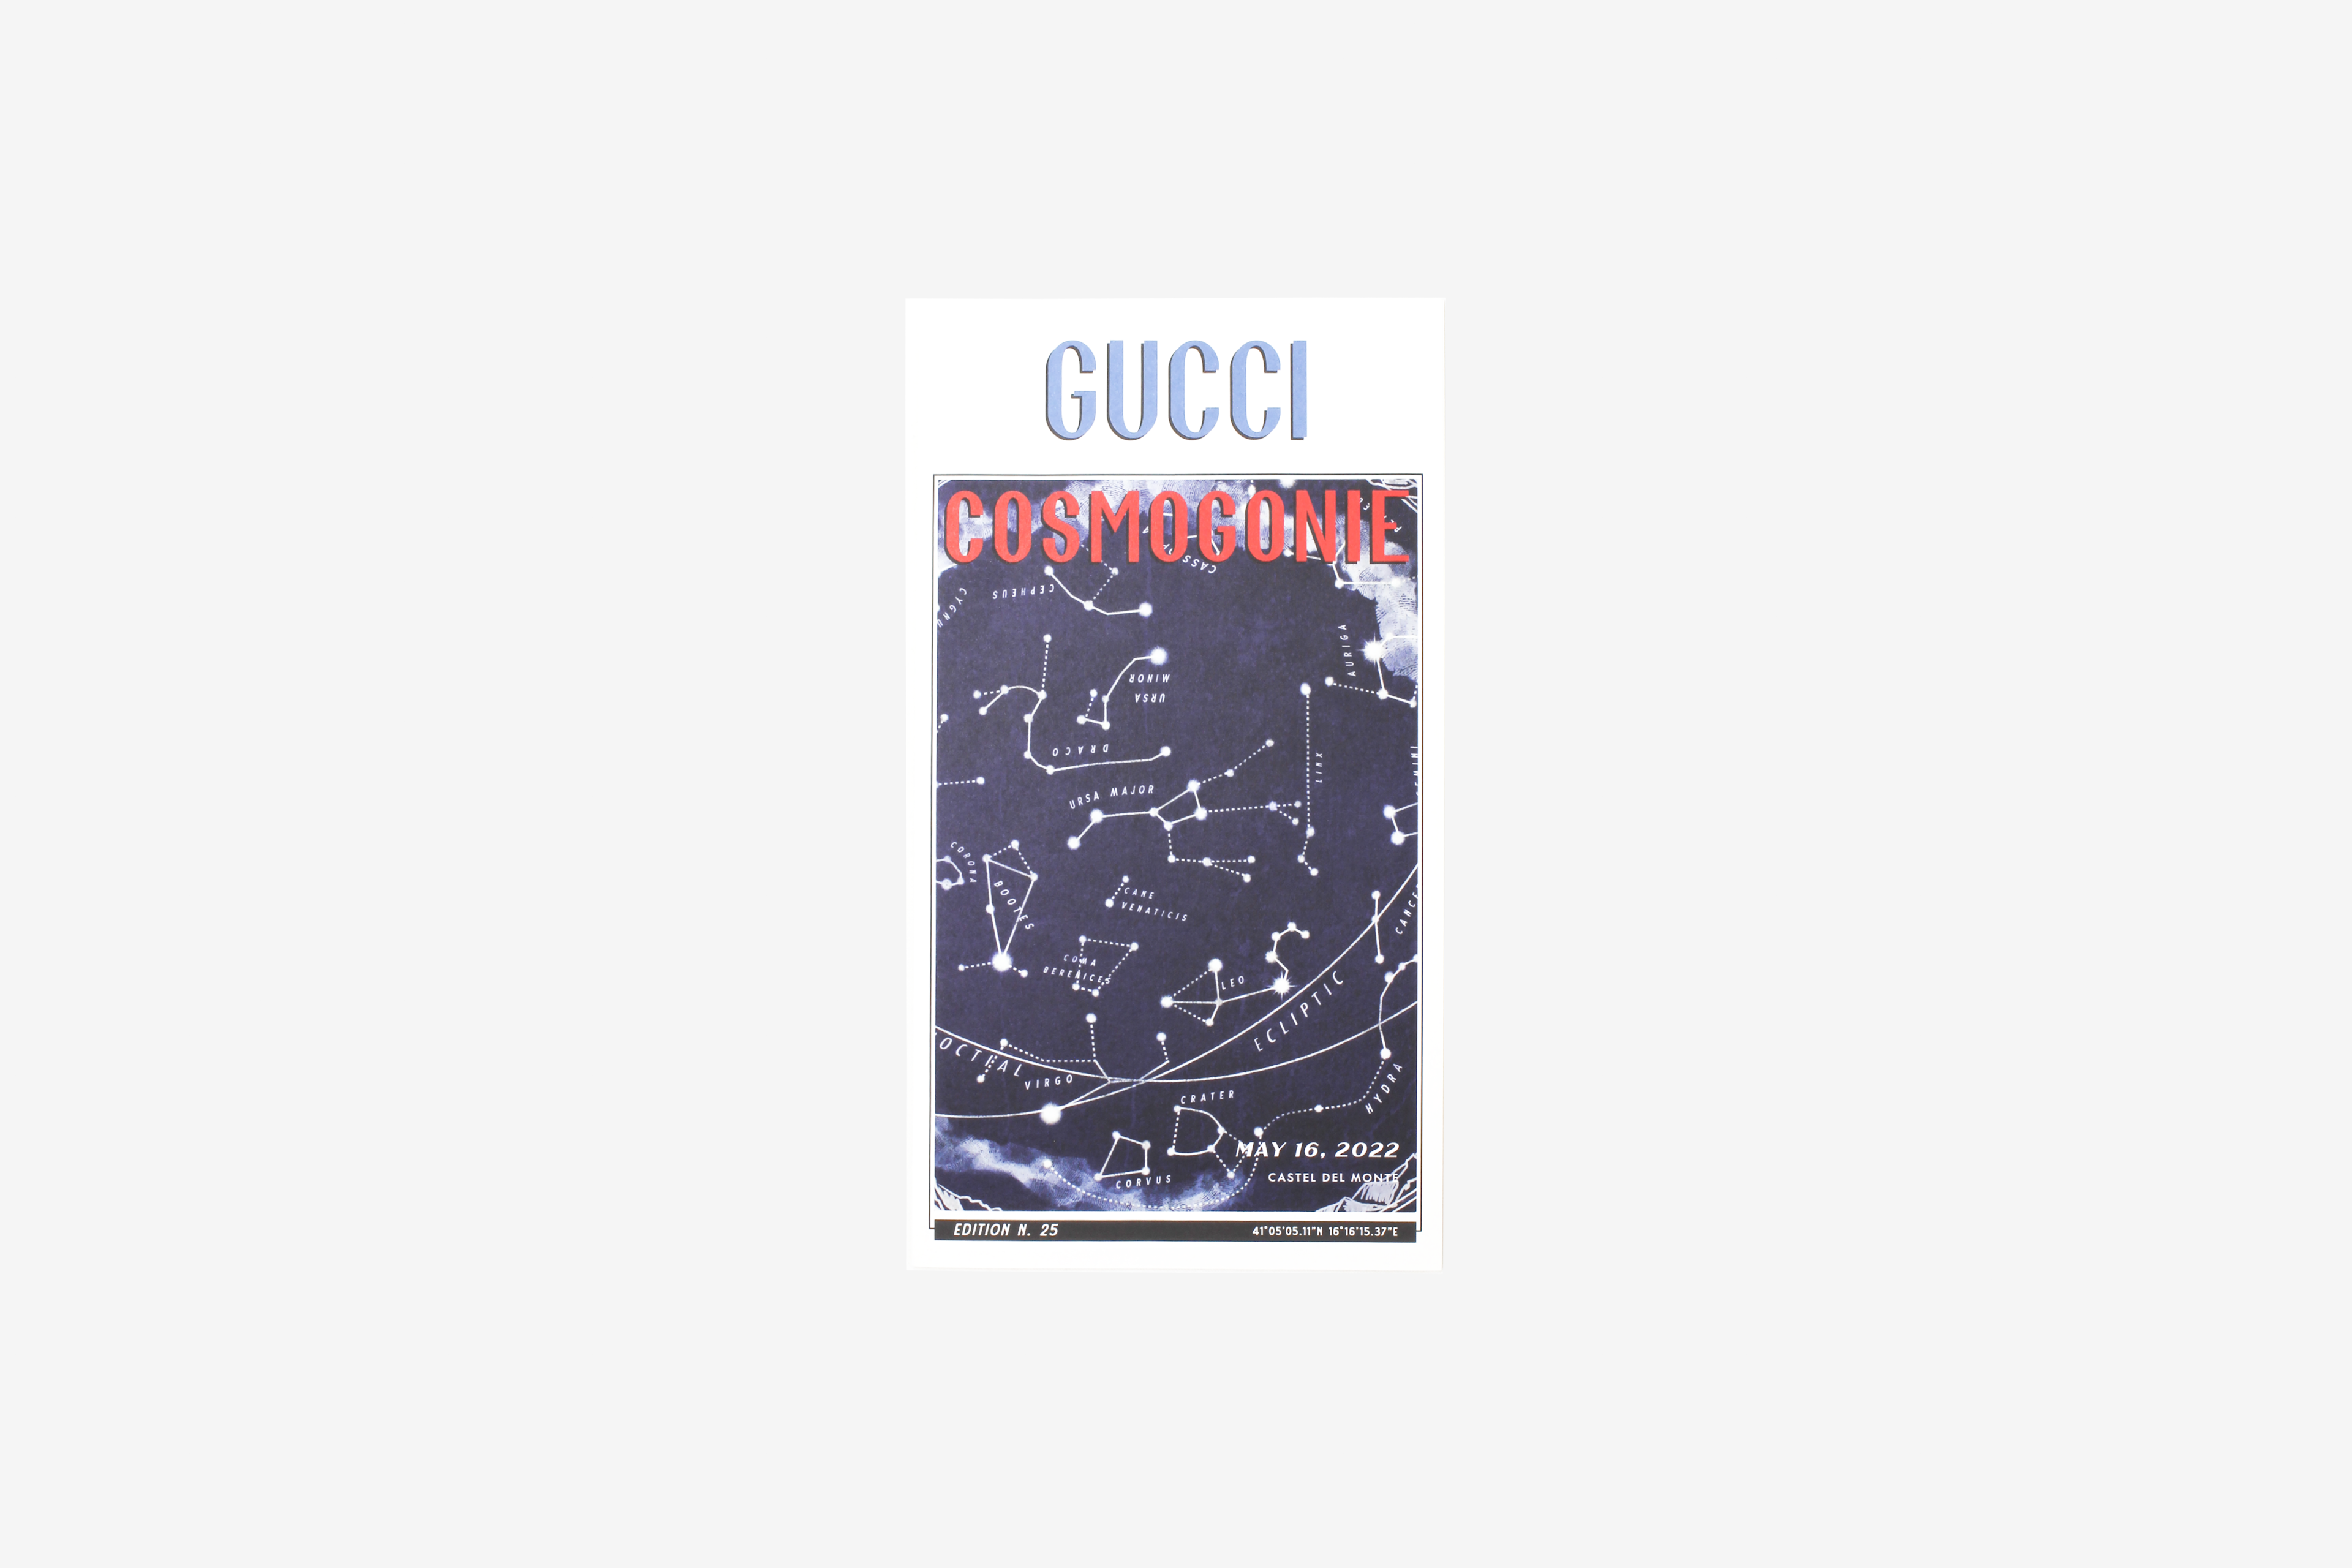 Gucci Cruise 2023 "Cosmogonie"